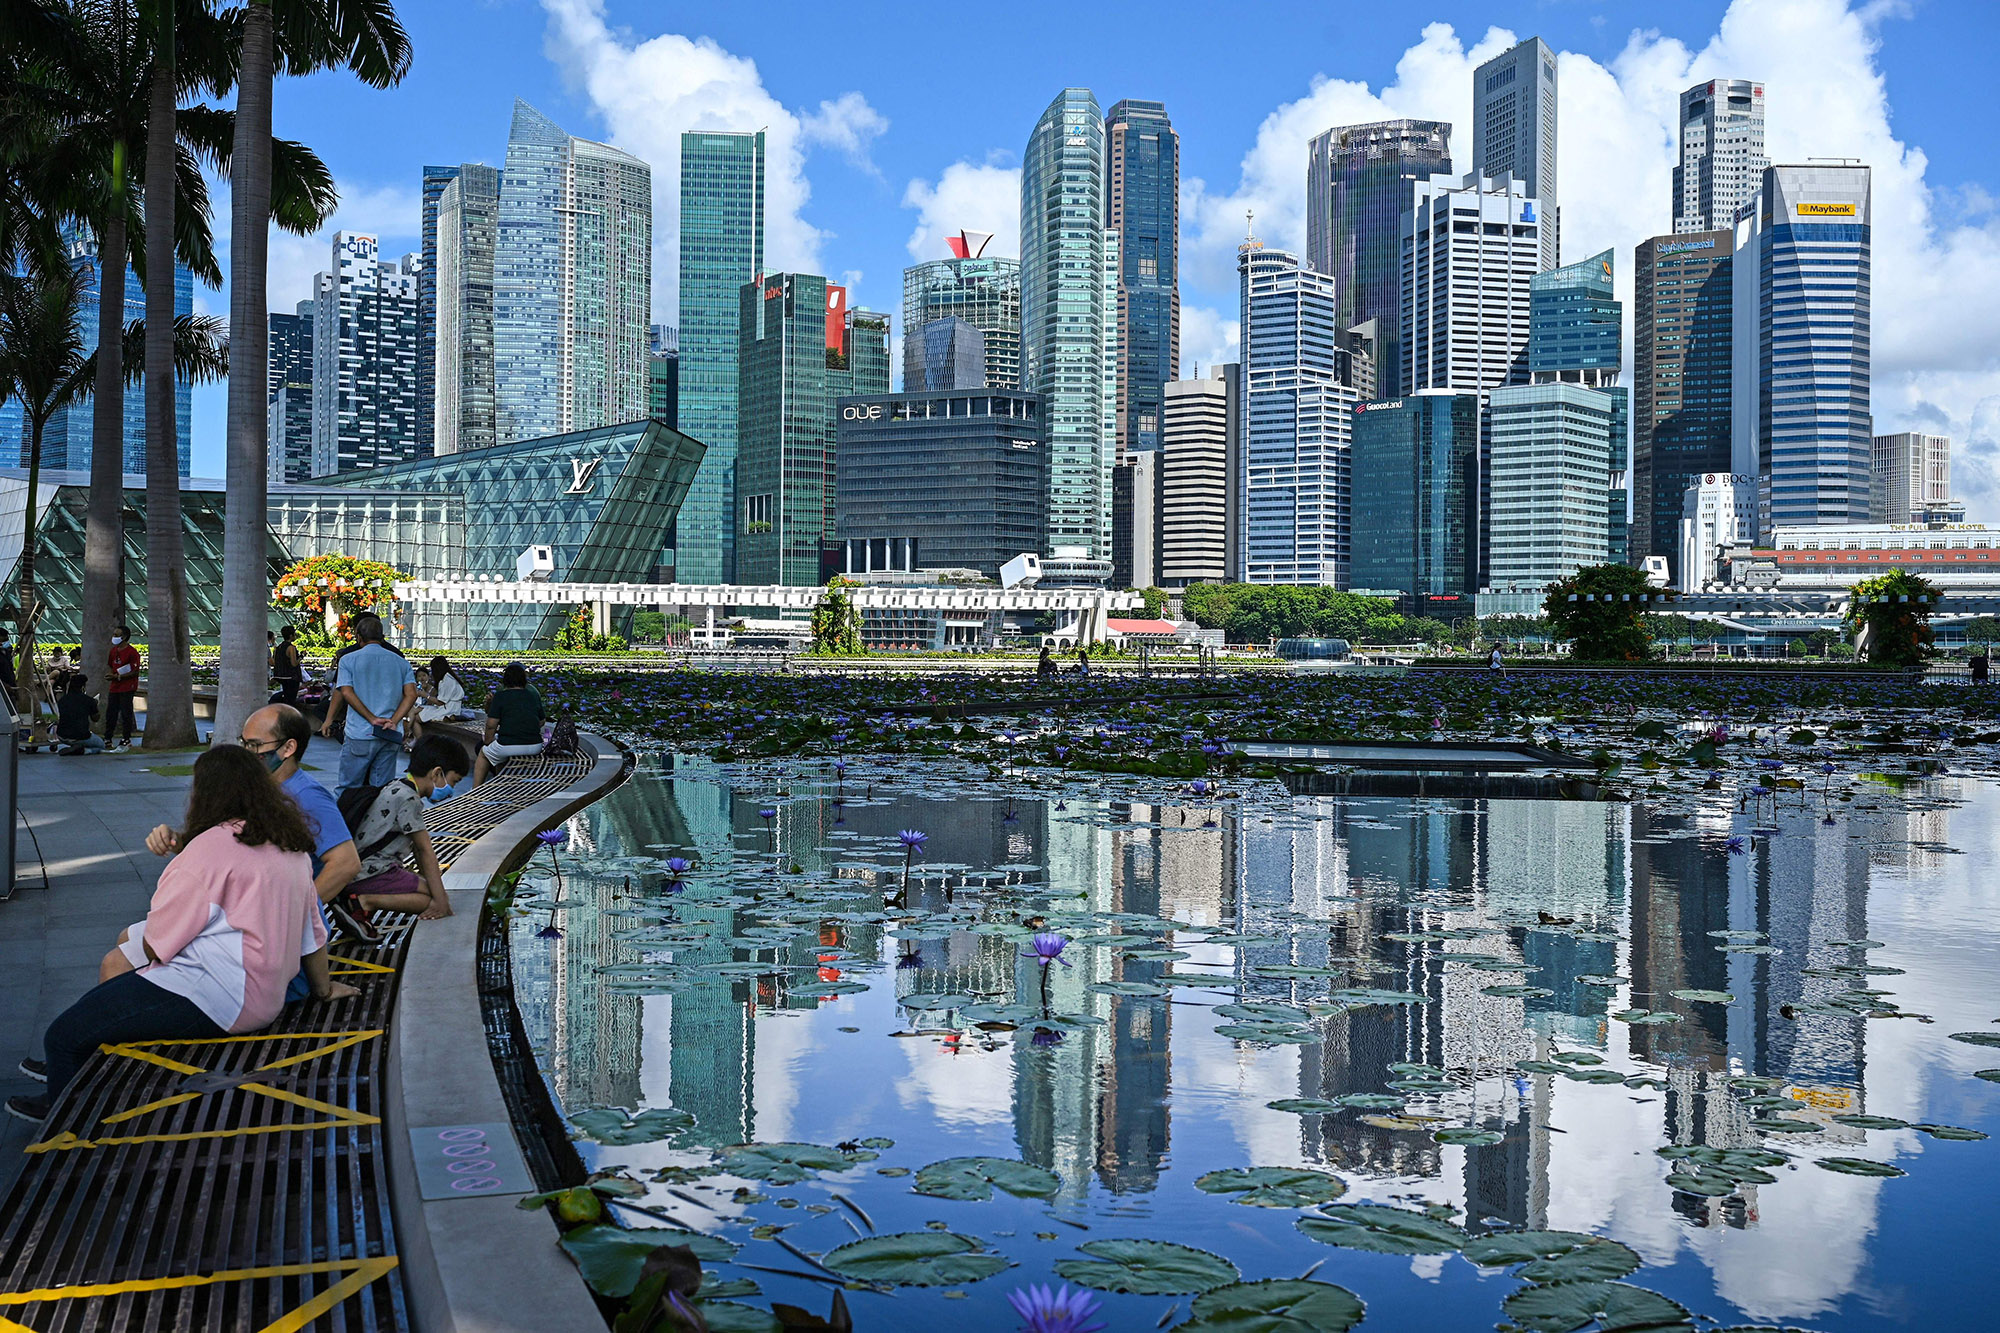 The skyline of Singapore.